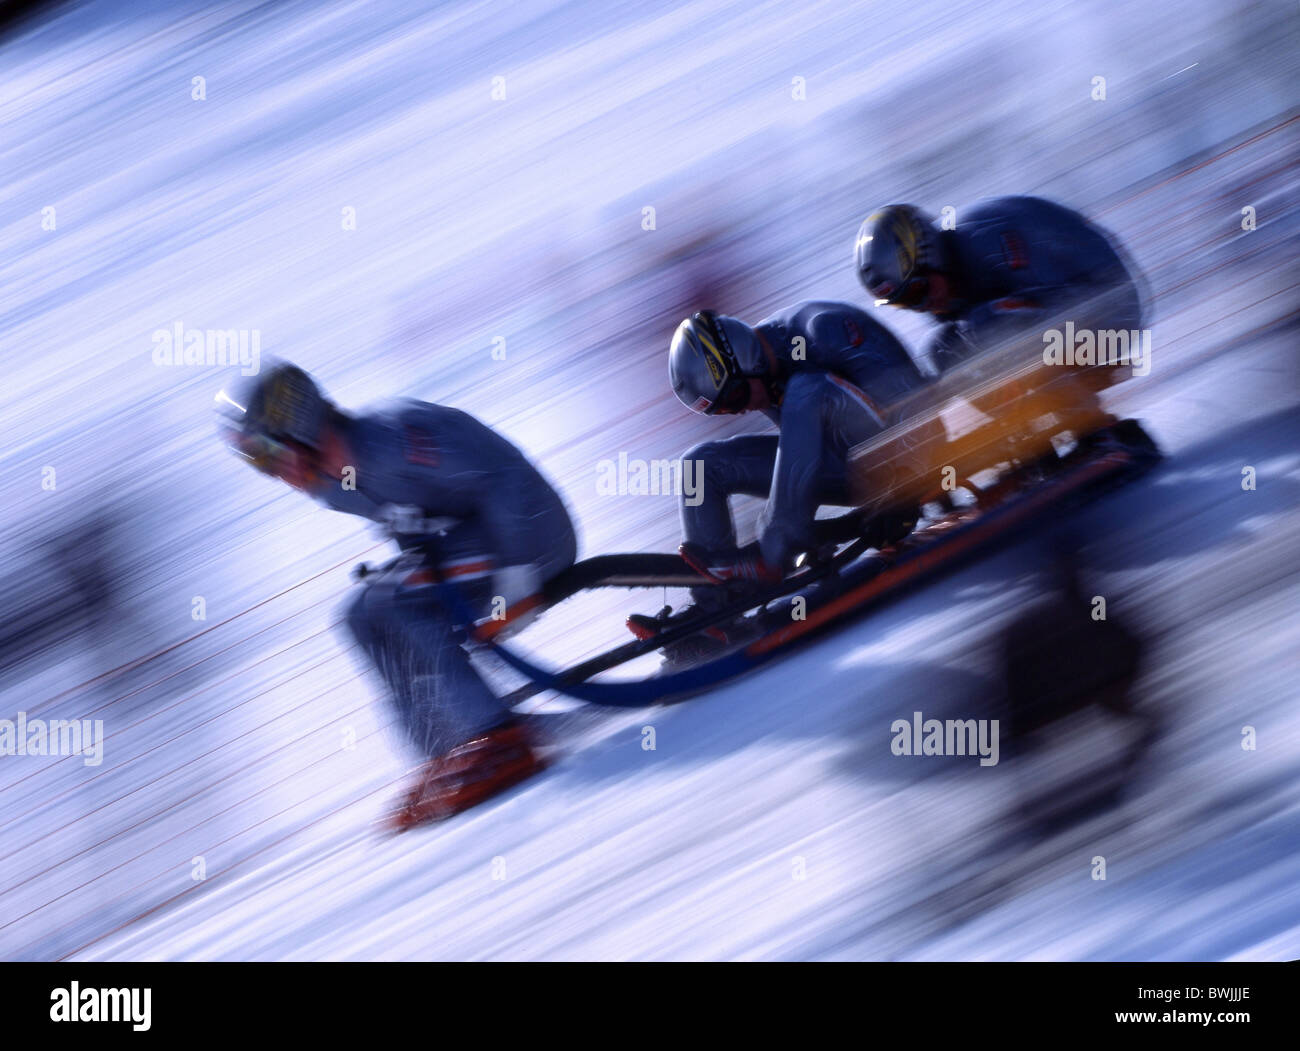 Clacson-bordata slitte runnings disposizione concorrenza sport slittino sleigh team spettatori sport invernali wint Foto Stock